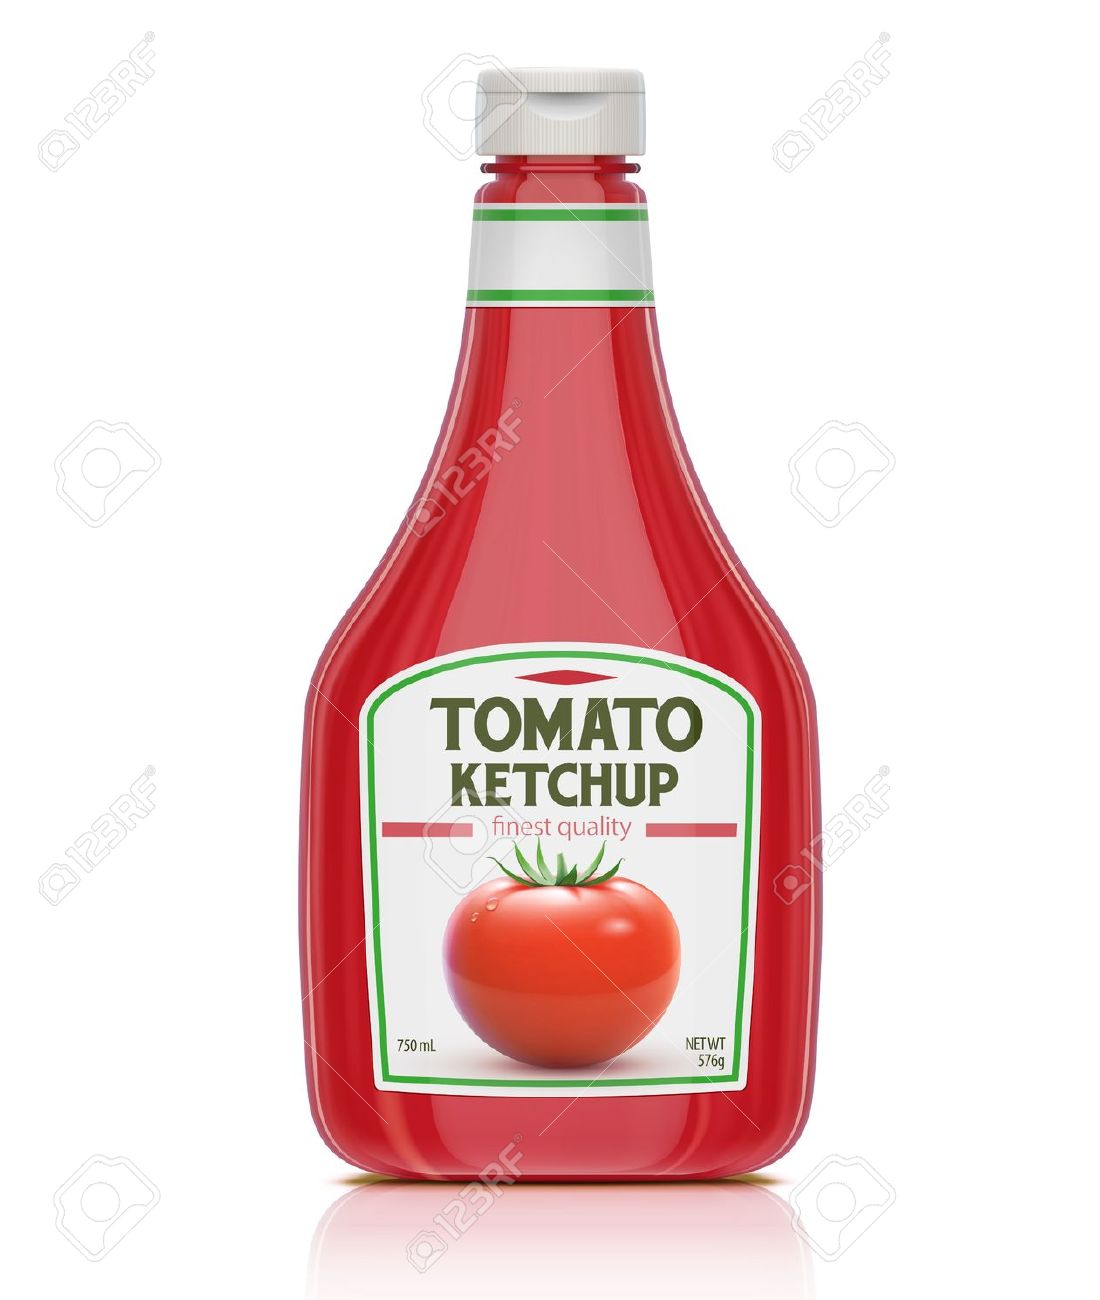 ketchup: illustration of .